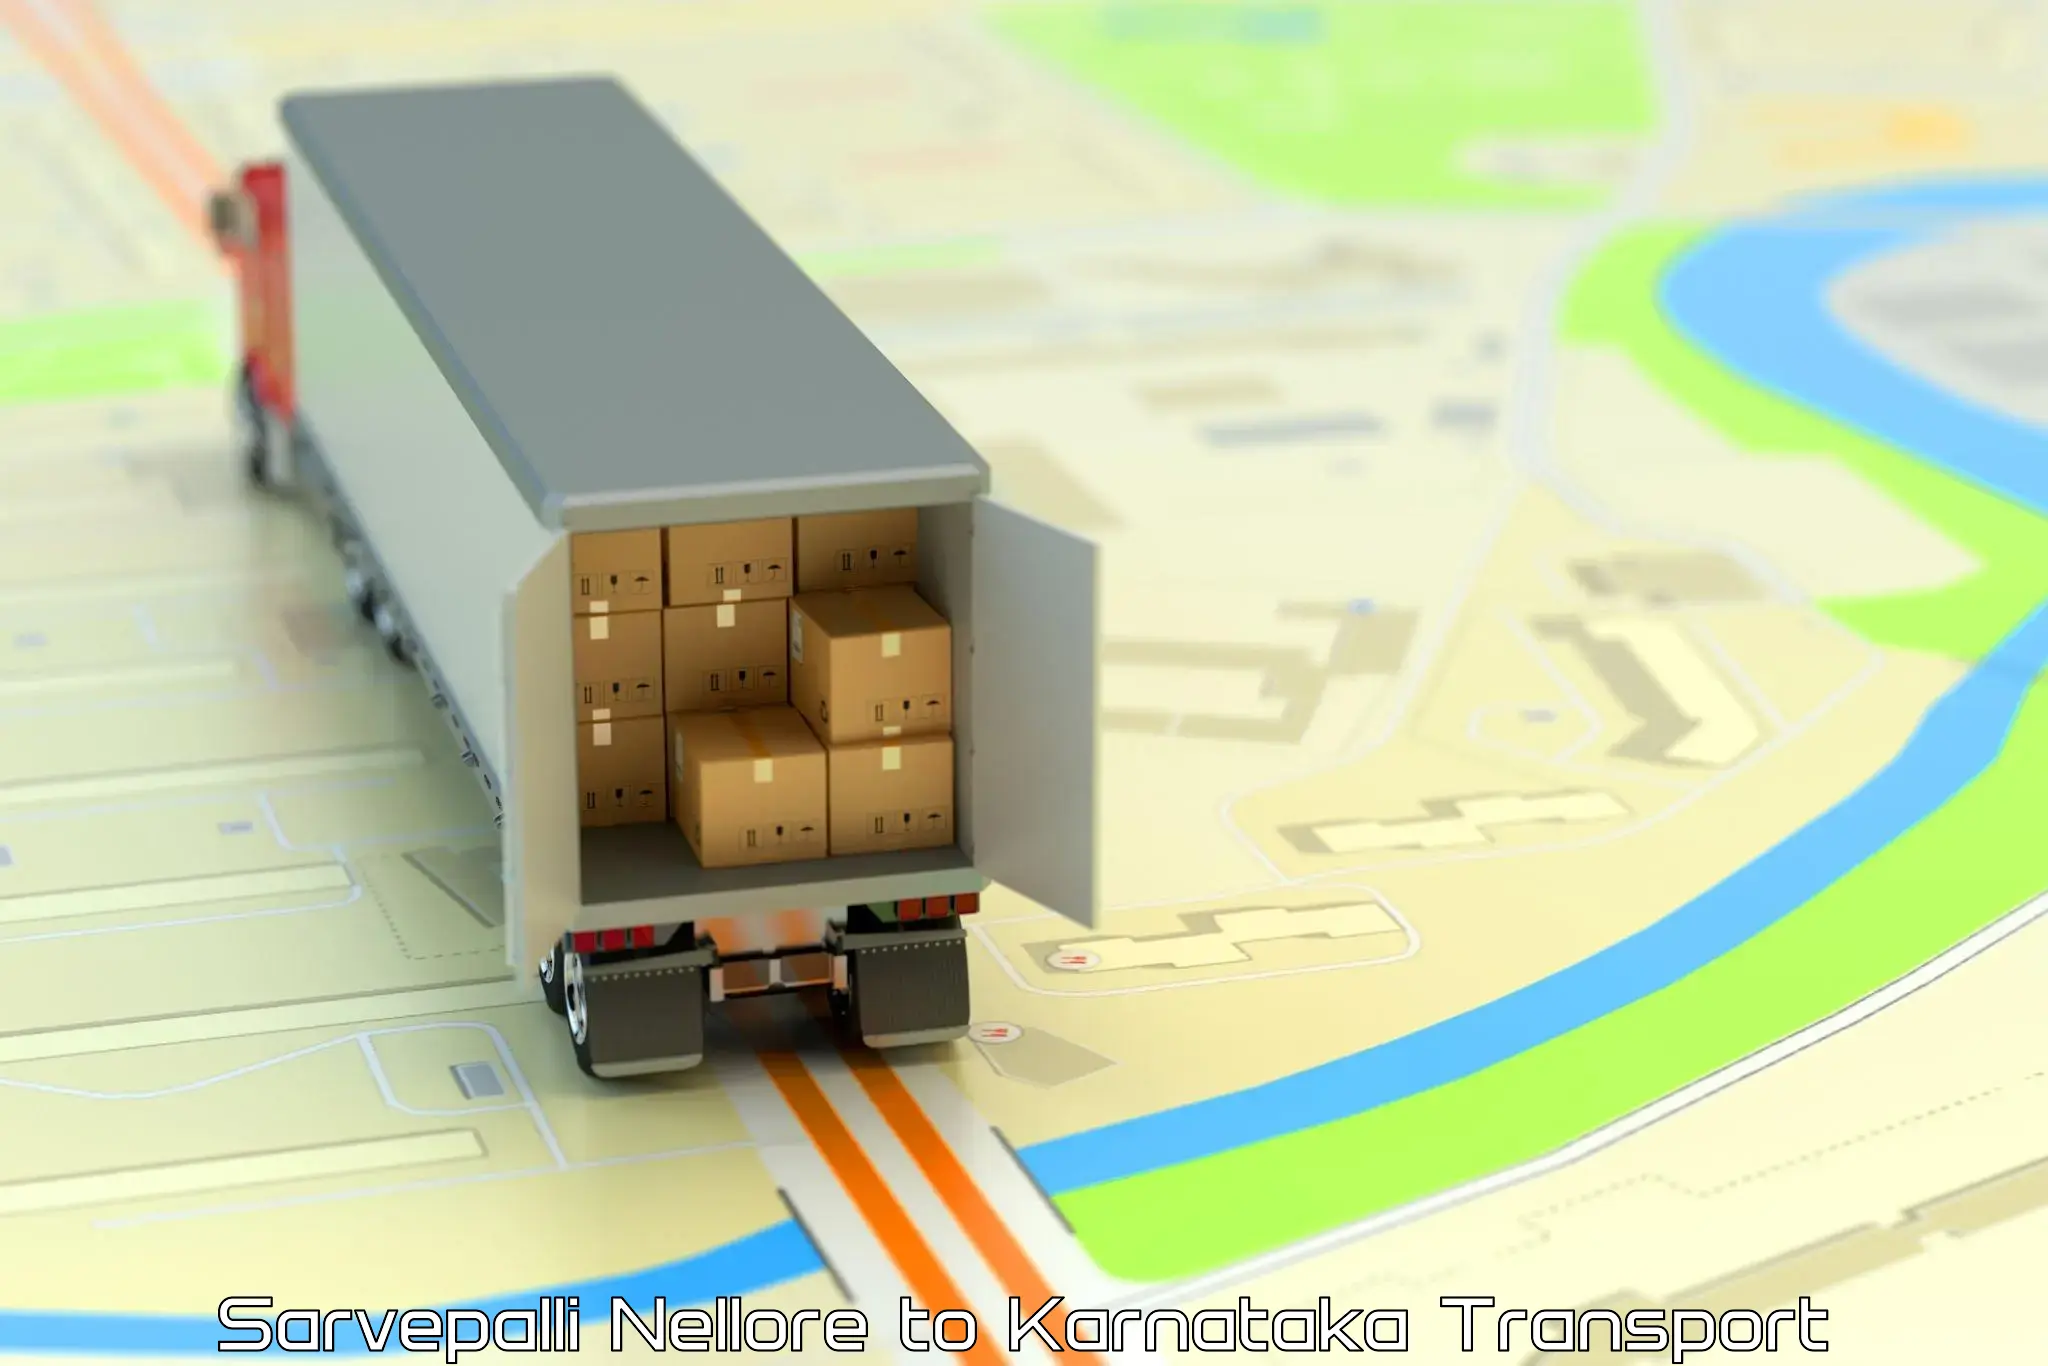 Truck transport companies in India Sarvepalli Nellore to Hungund